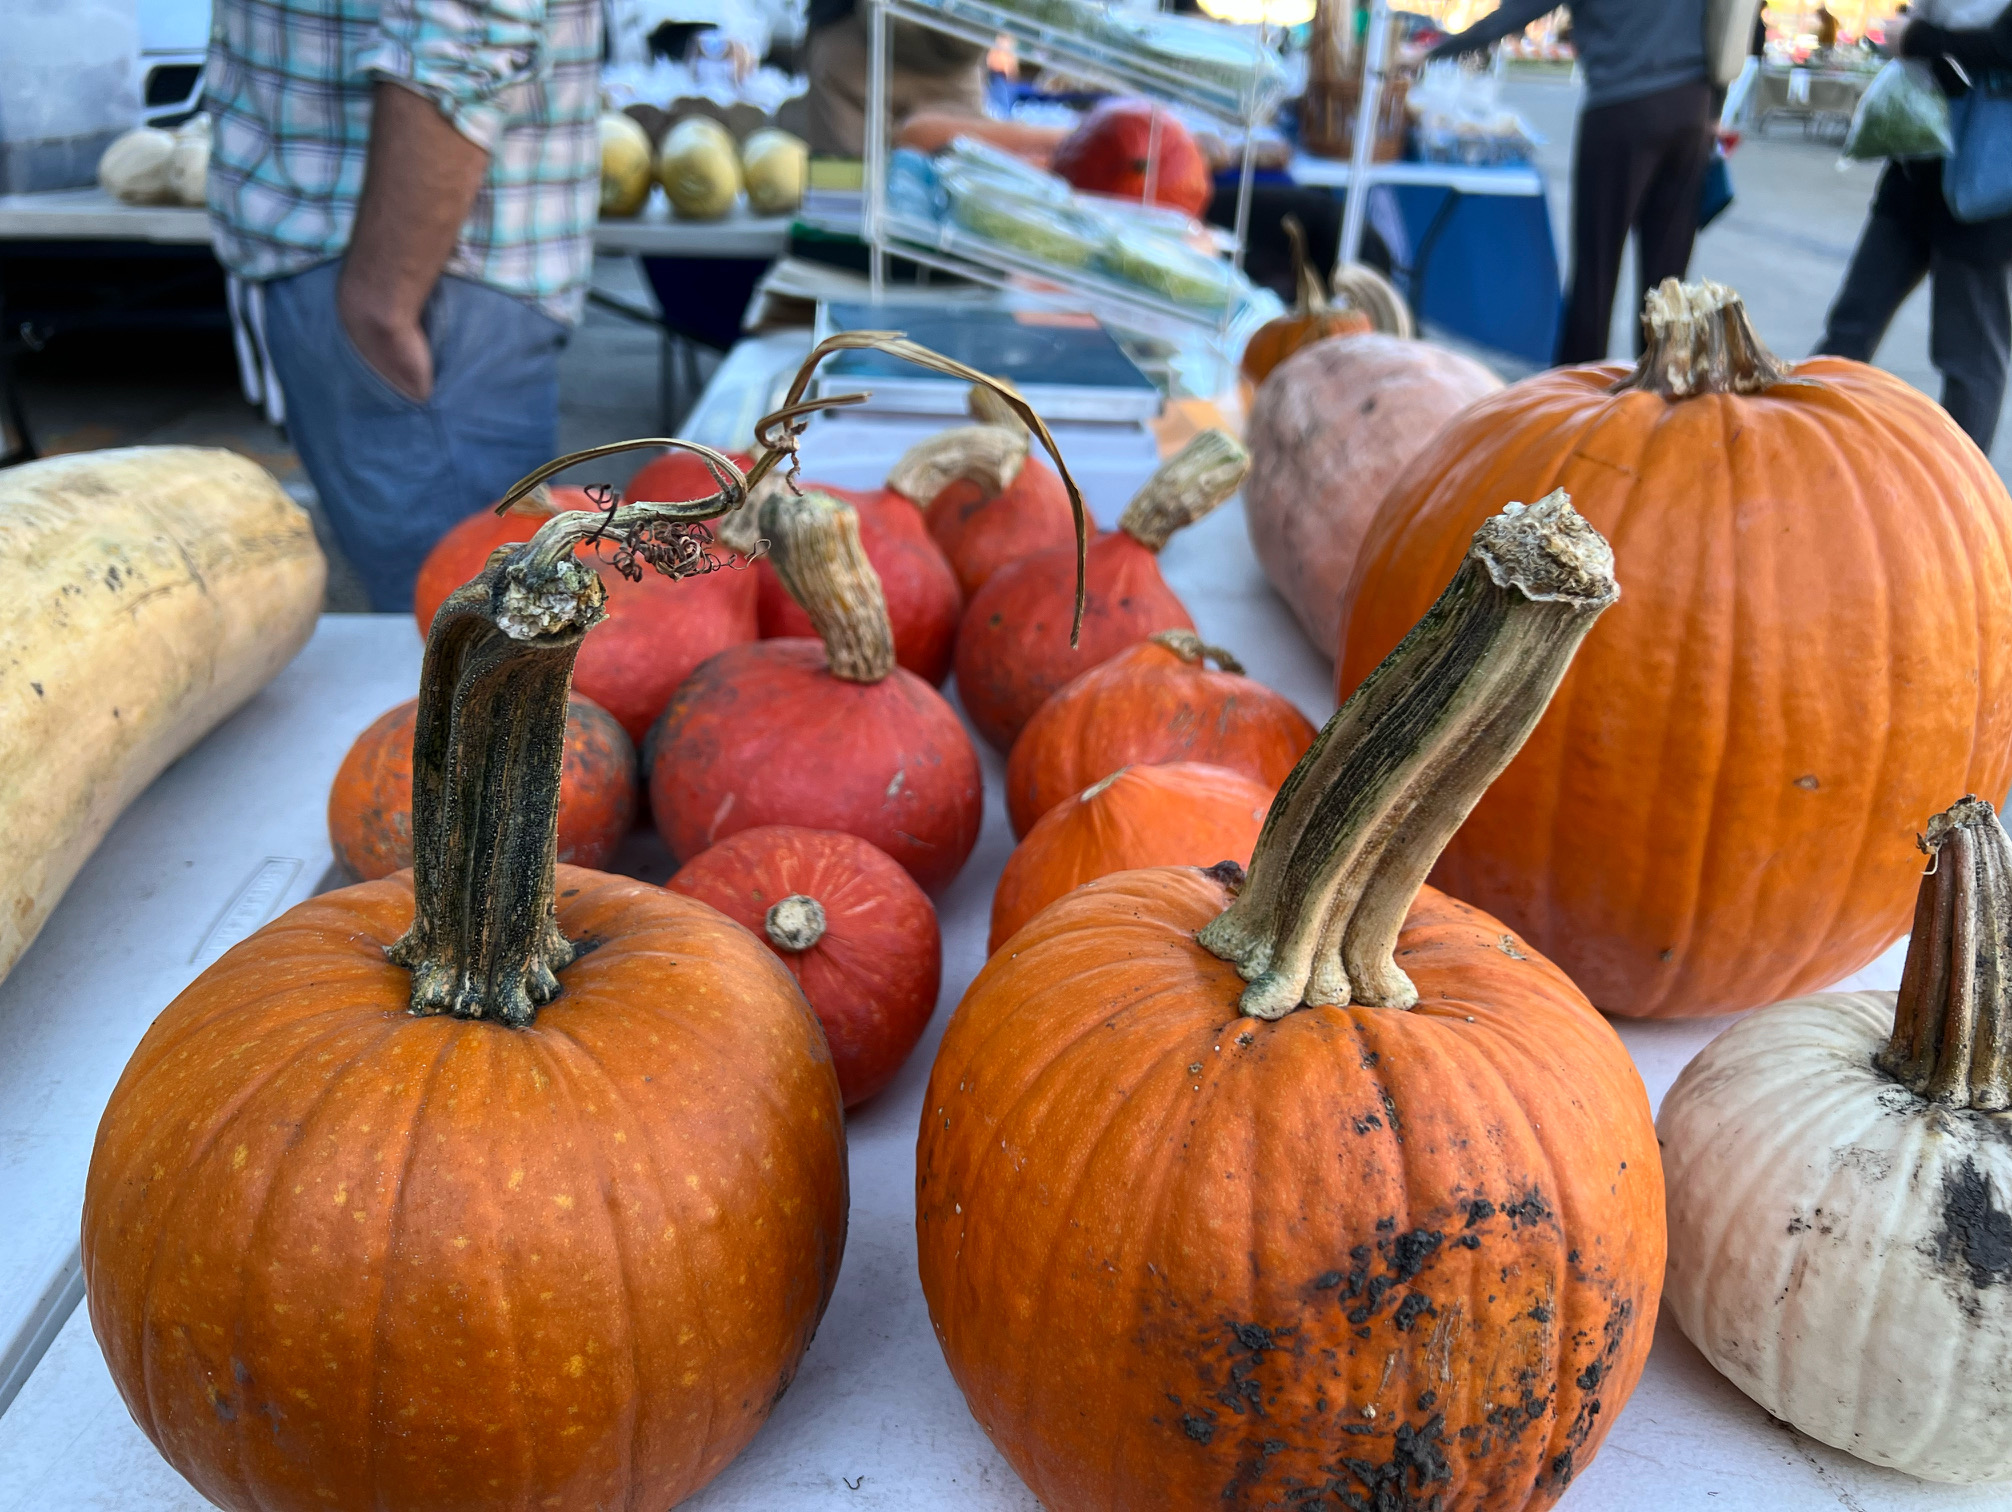 Diamond's Homestead has pumpkins for sale at the market. Photo by Alyssa Buckley.